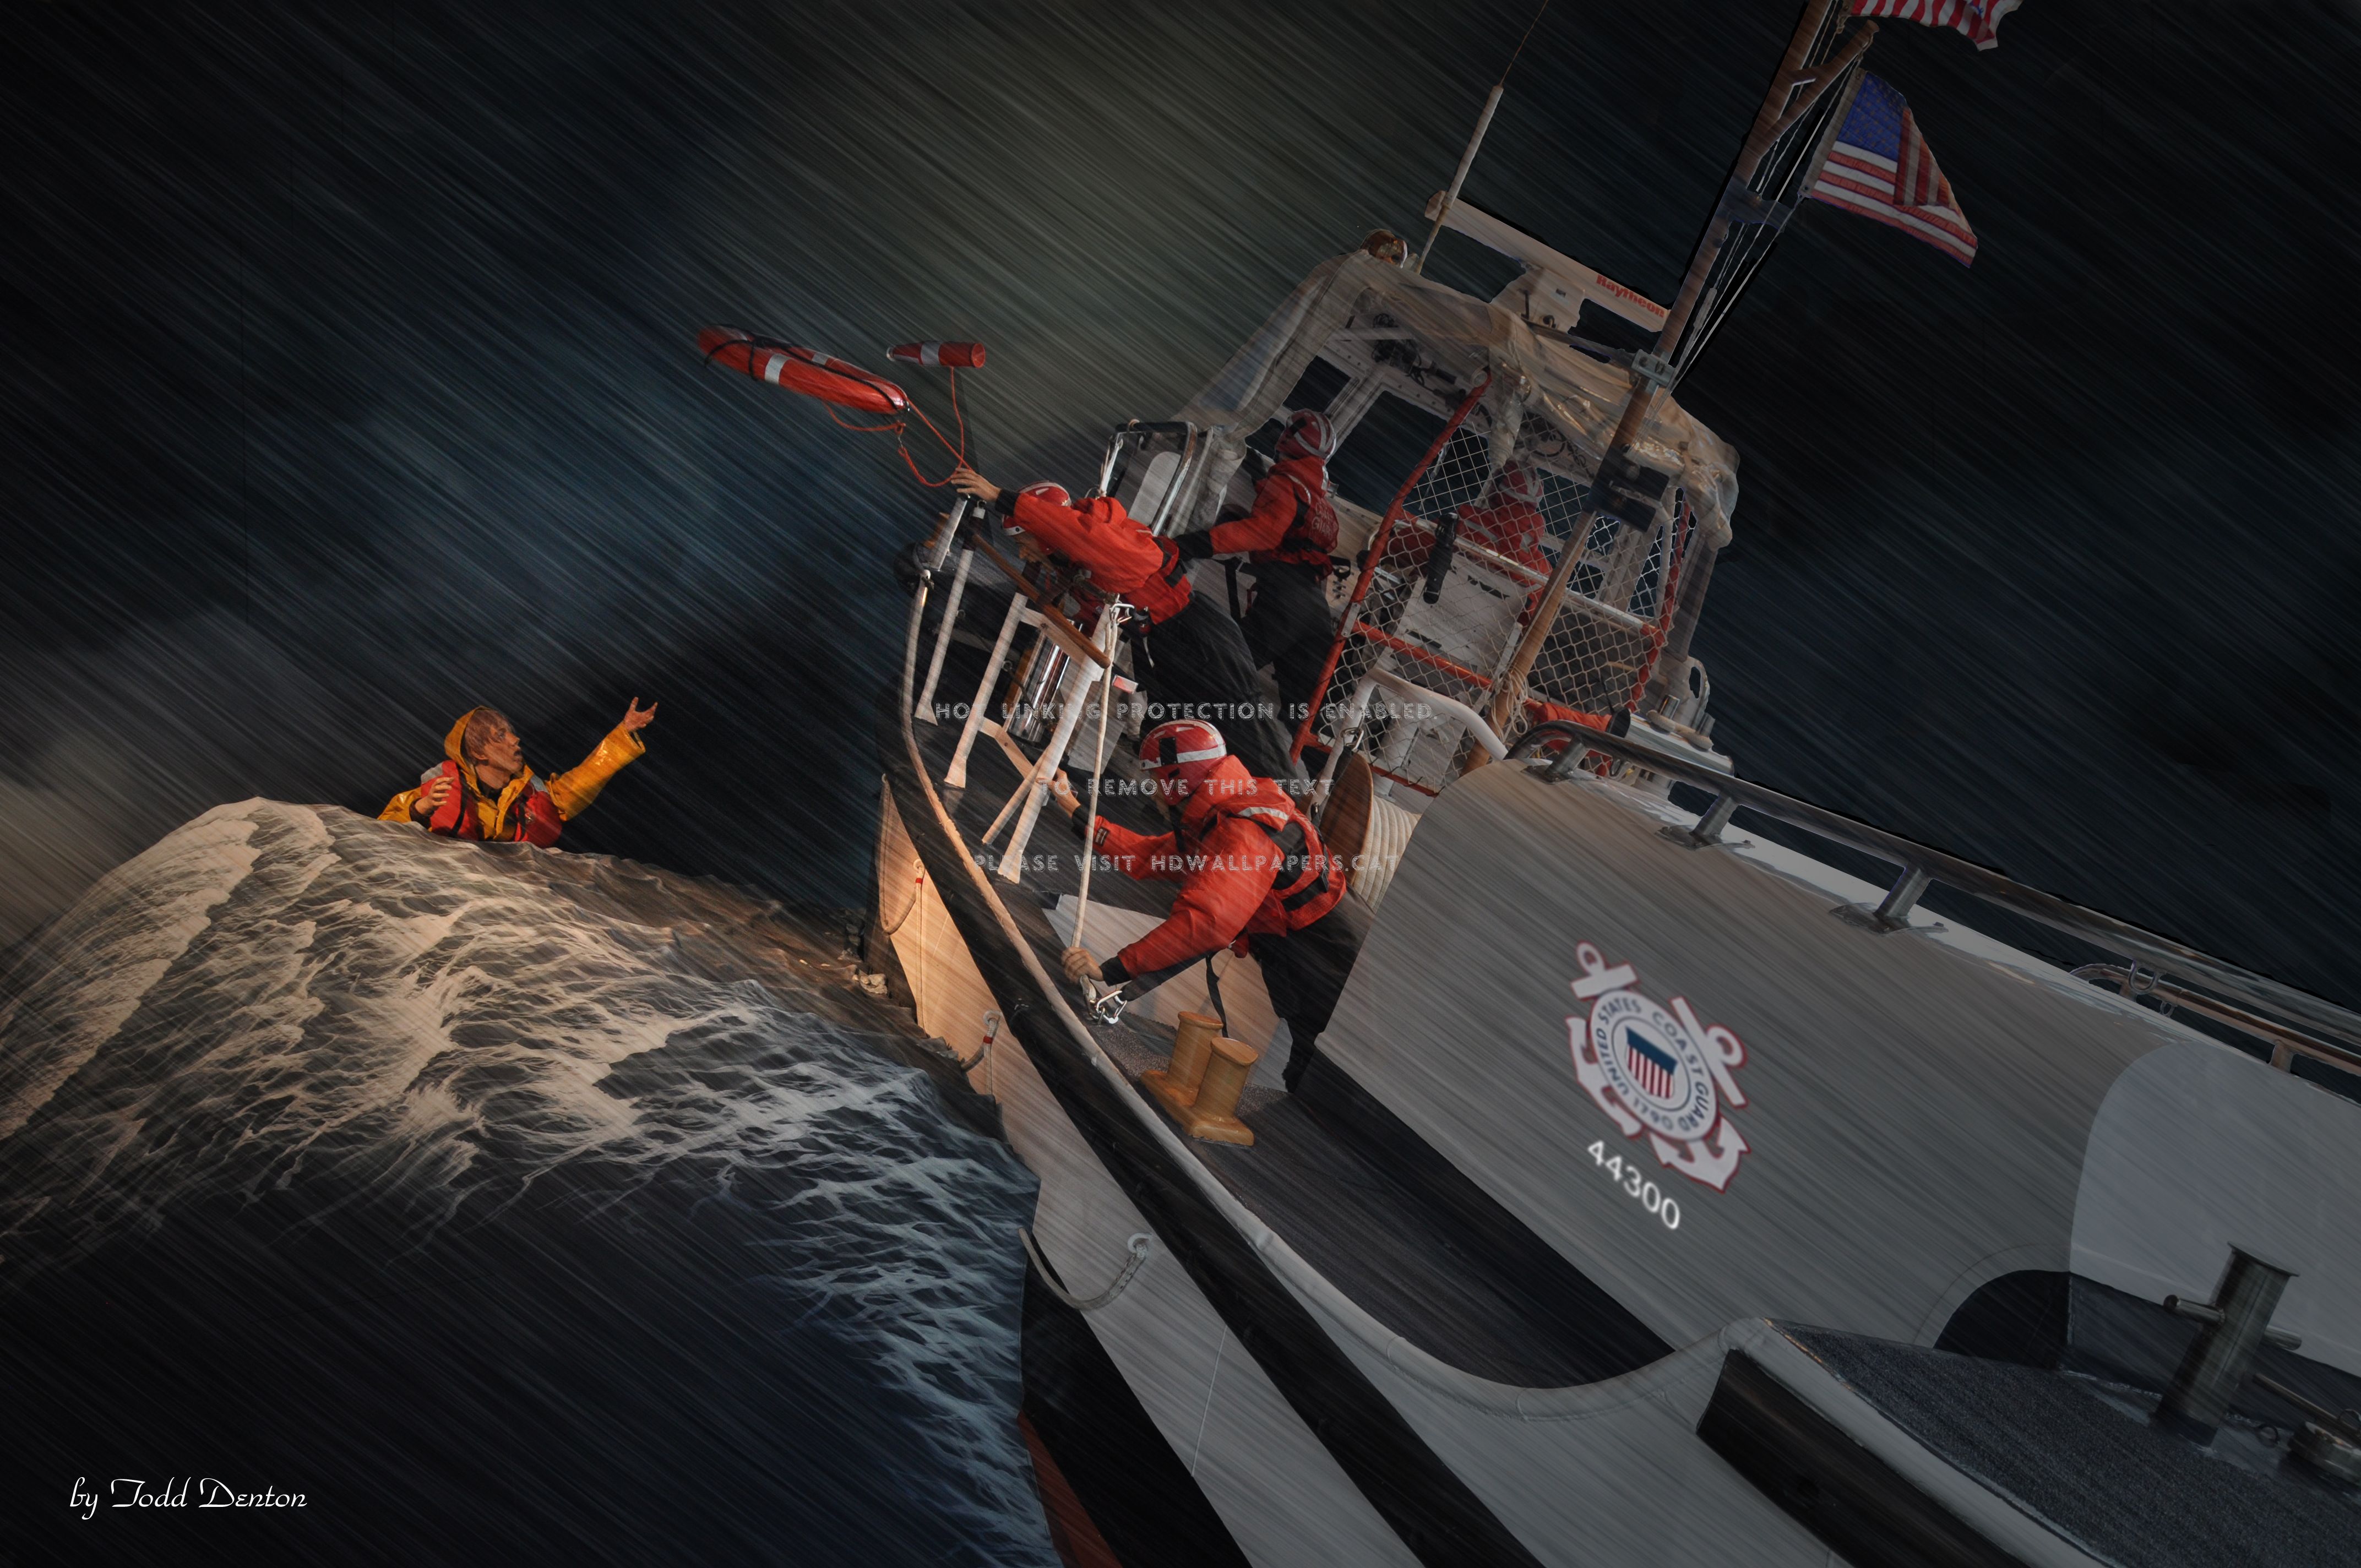 rescue at sea strom coast guard waves